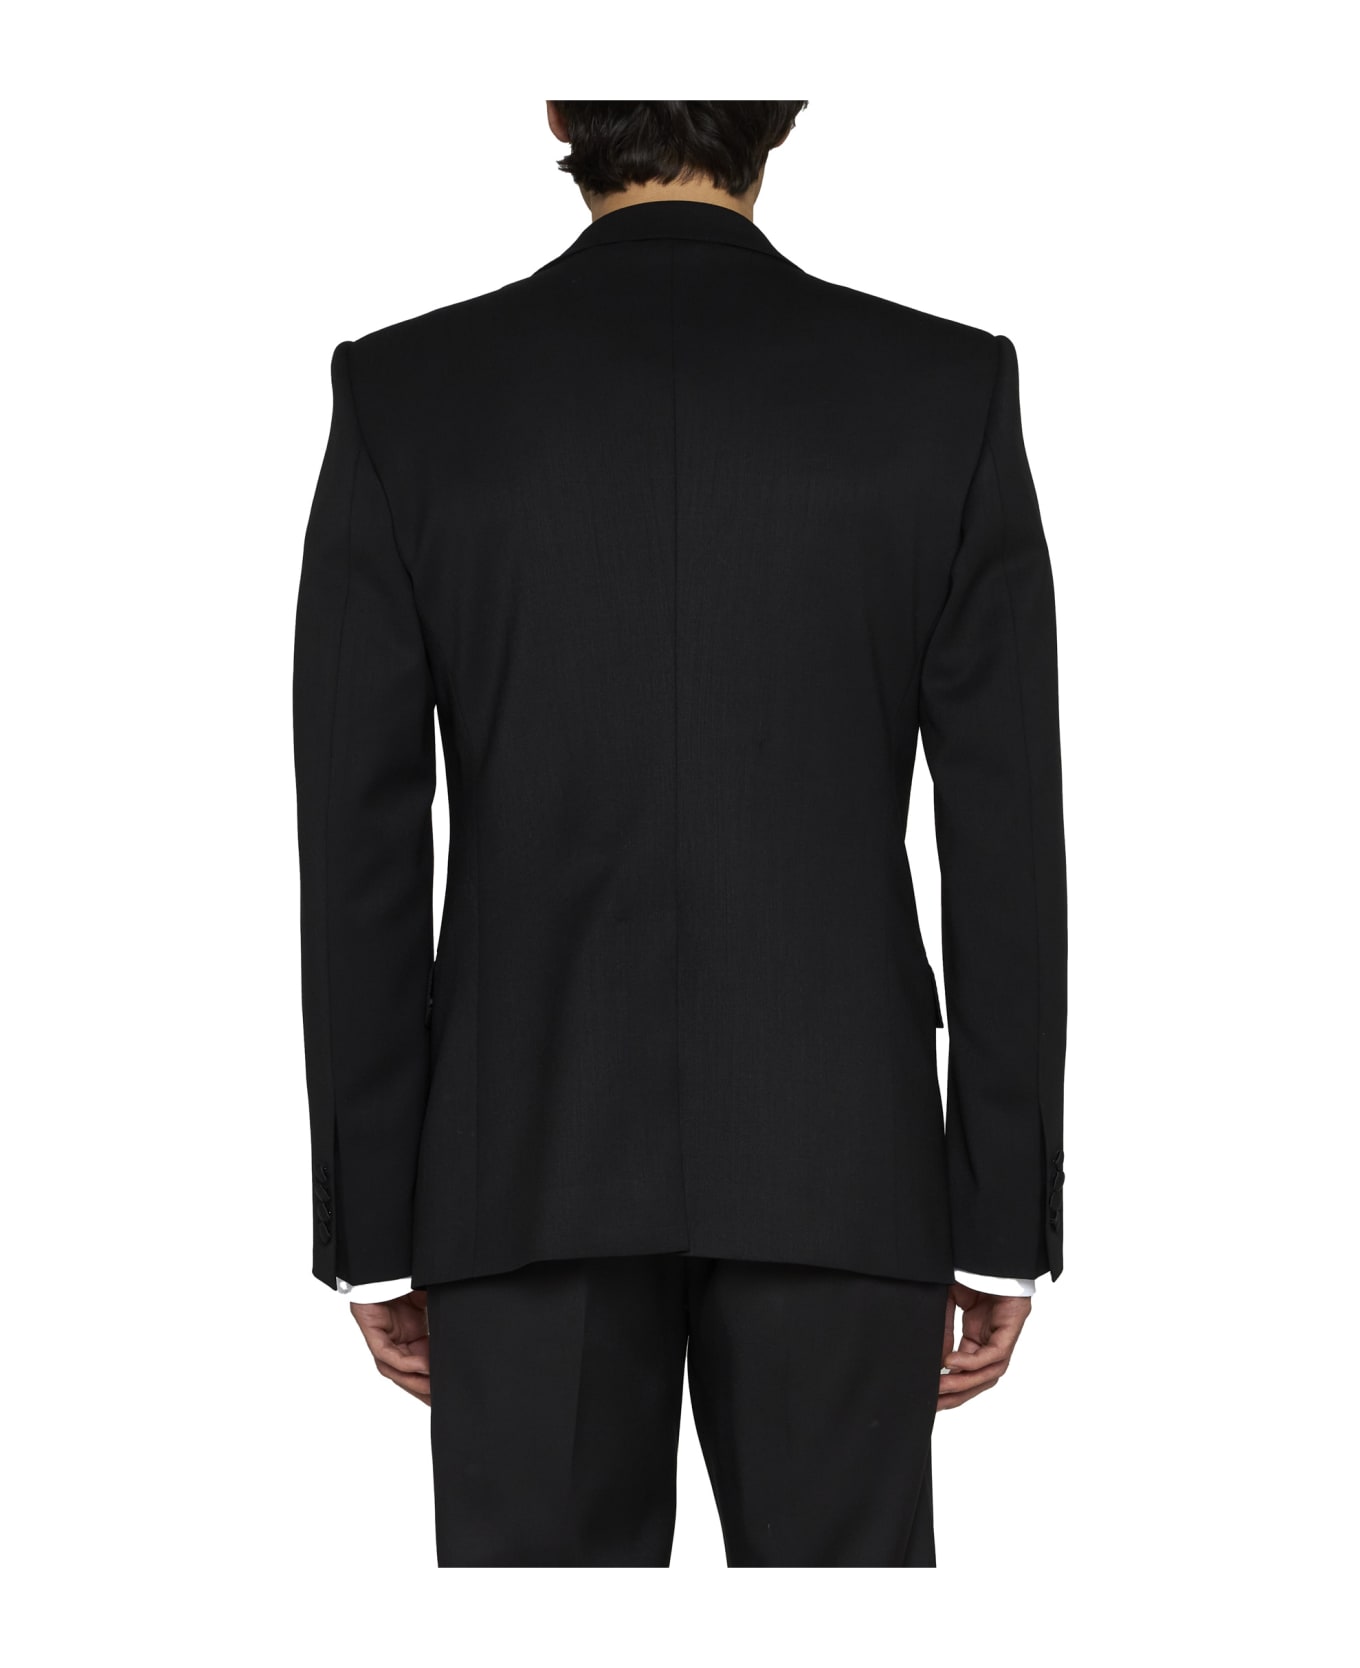 Dolce & Gabbana Single-breasted Jacket - Black